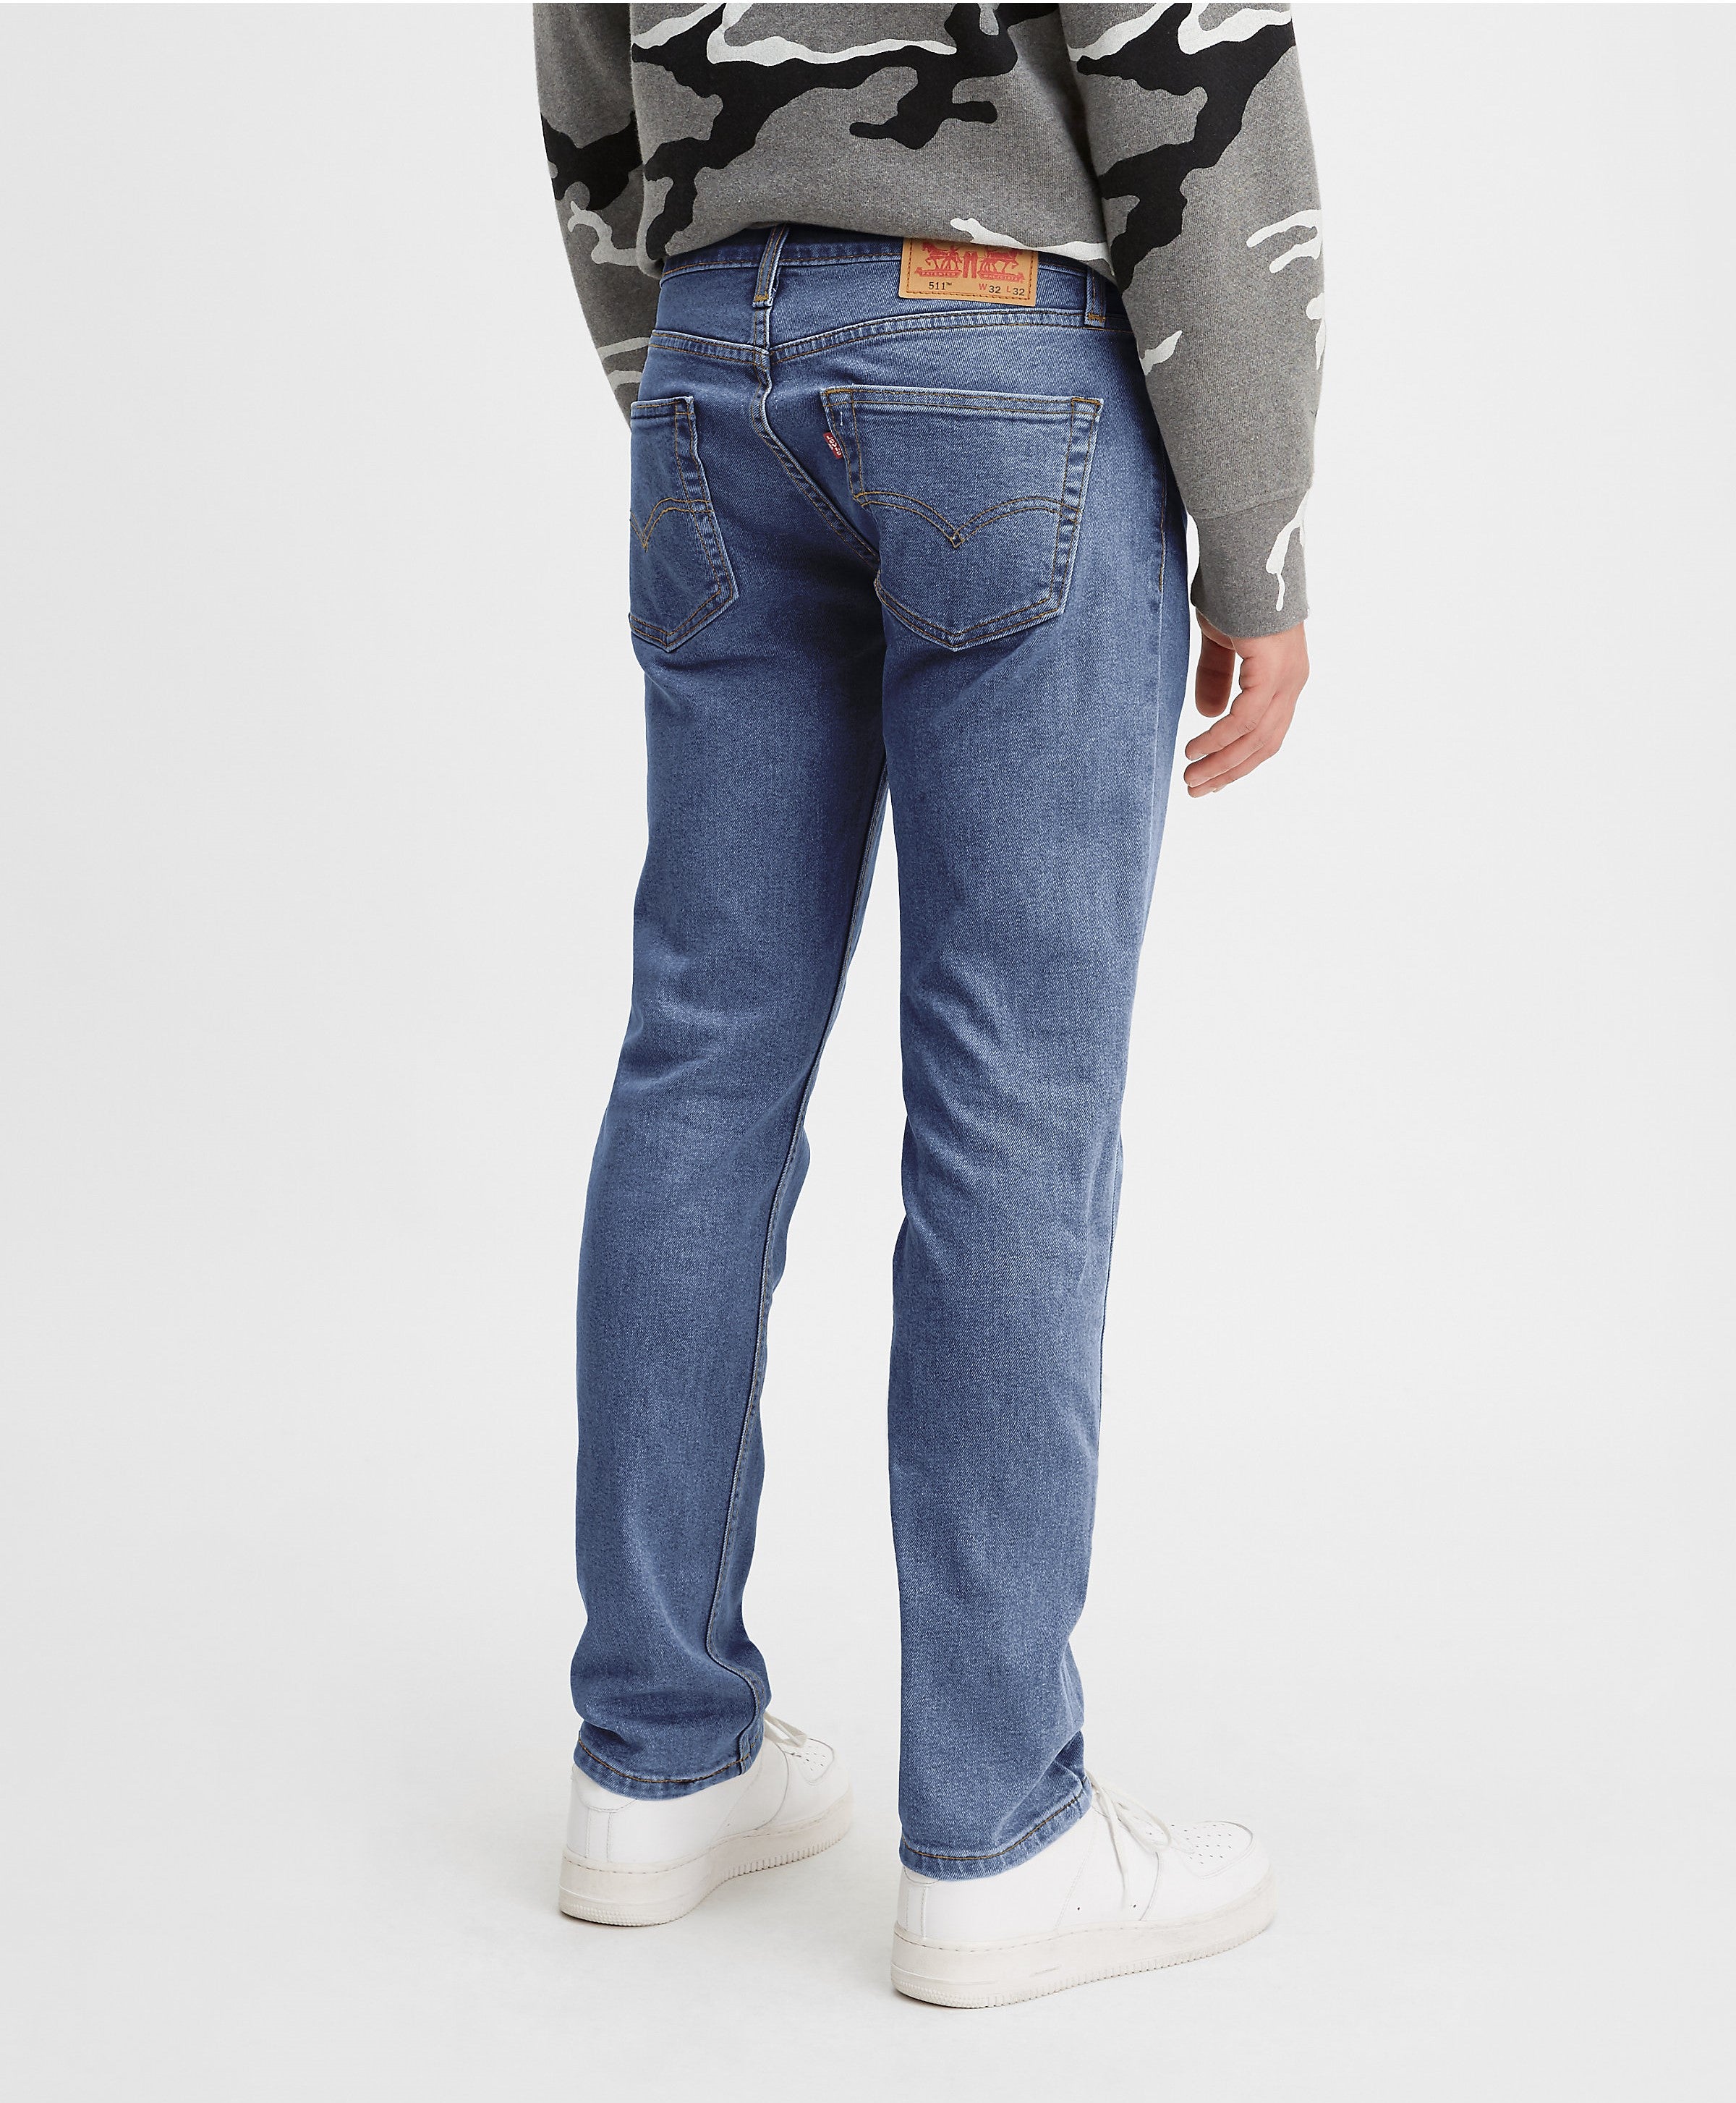 pantalones-jeans-levis-511-slim-kota-p-caballeros